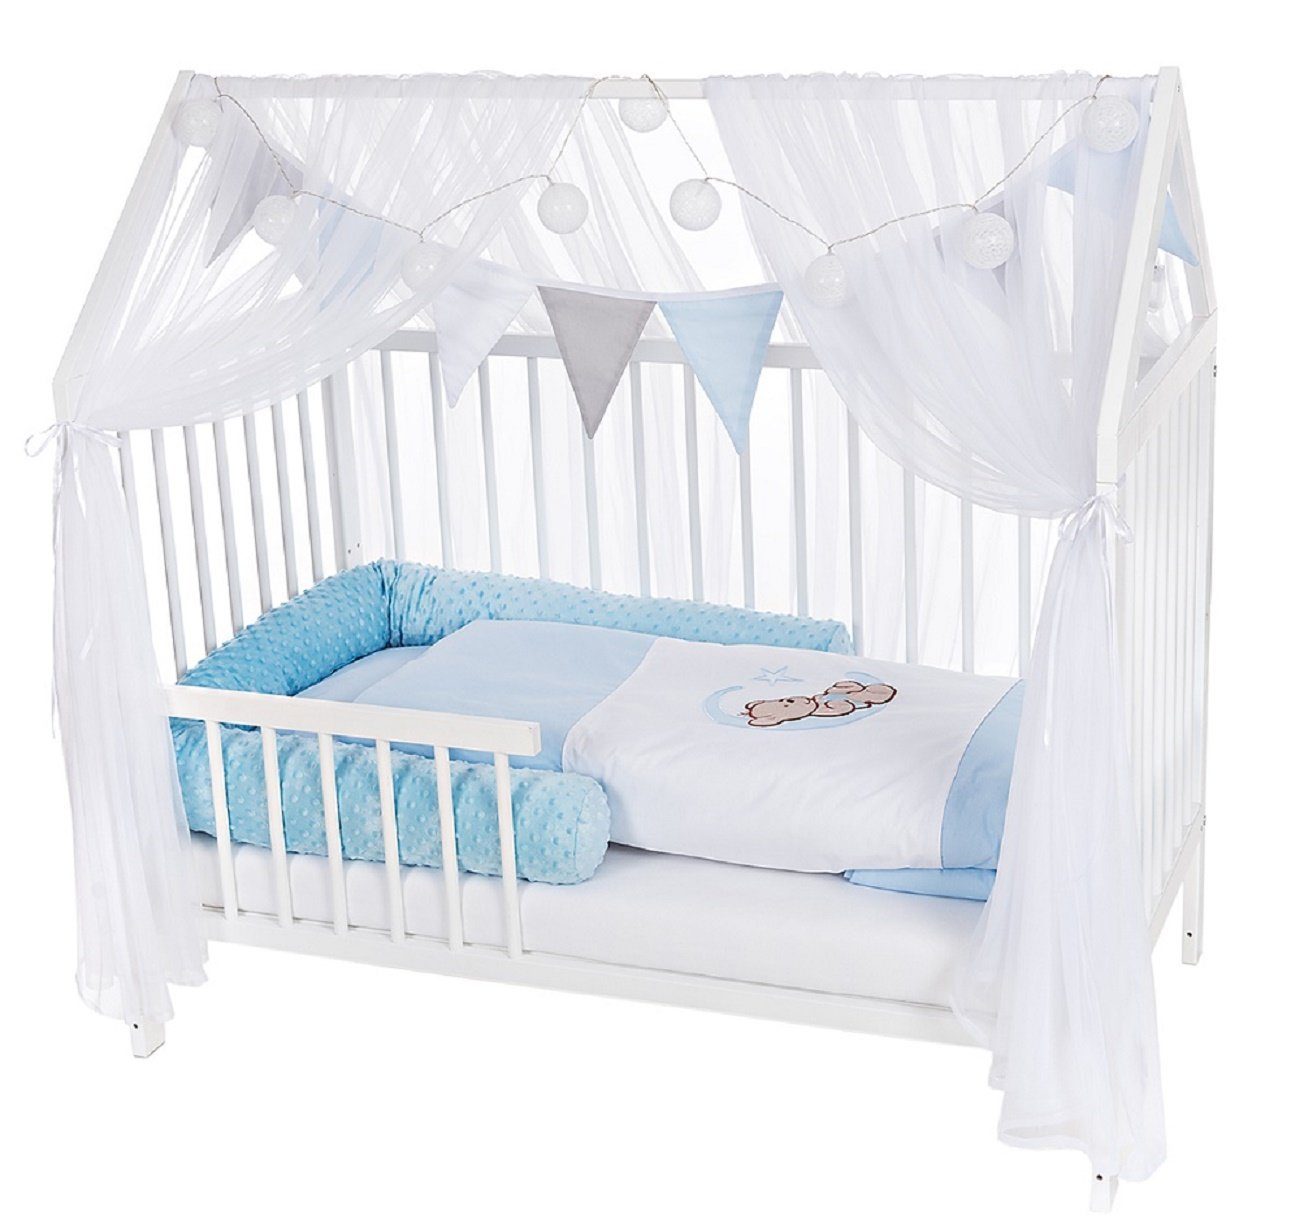 Babyhafen Hausbett Kinderbett 60x120 Rausfallschutz Umbaubar Teddy blau (Set, Komplettbettset), Komplettbettset